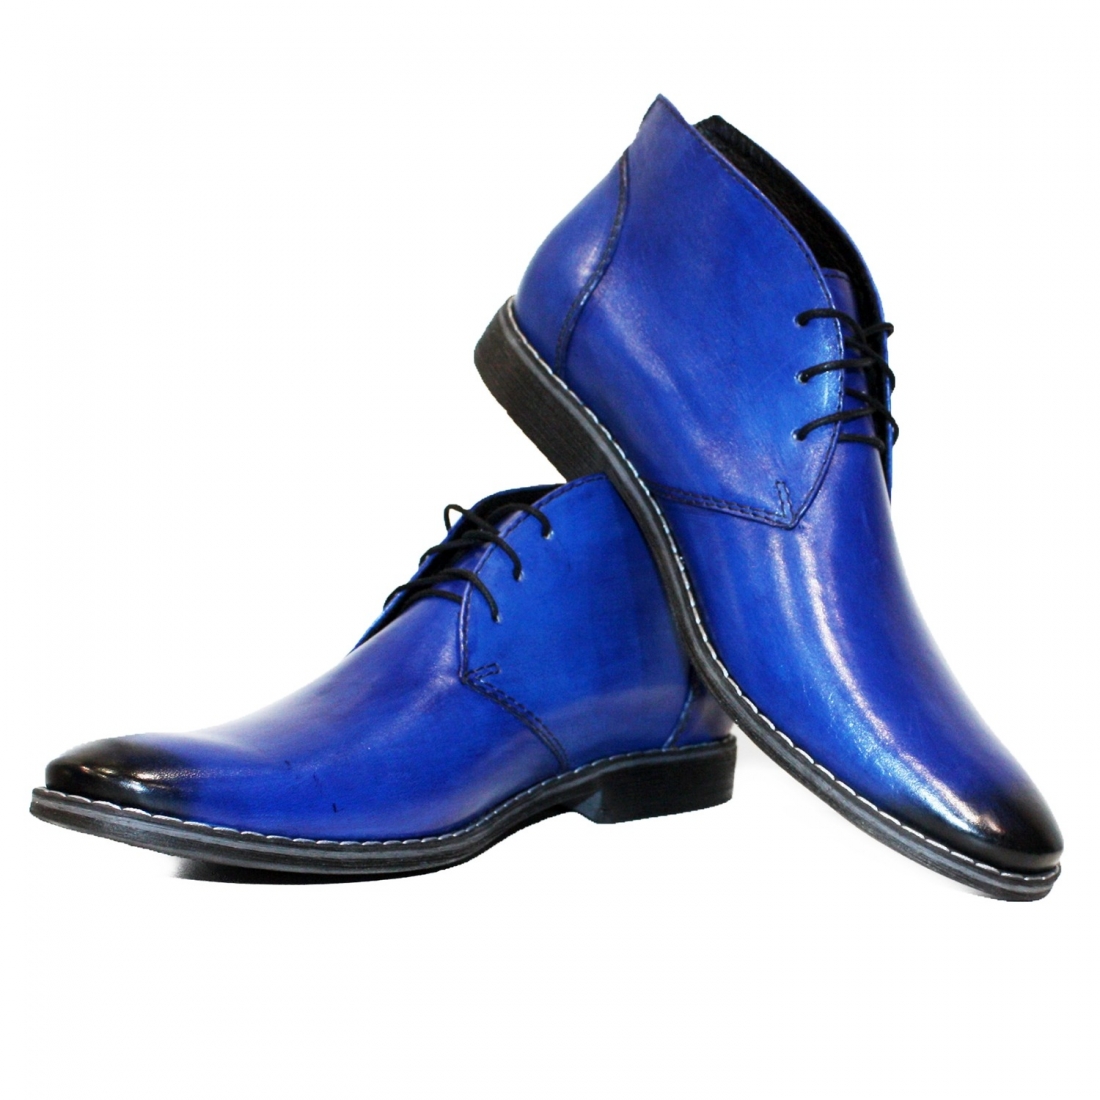 Modello Rexasso - Chukka Botas - Handmade Colorful Italian Leather Shoes